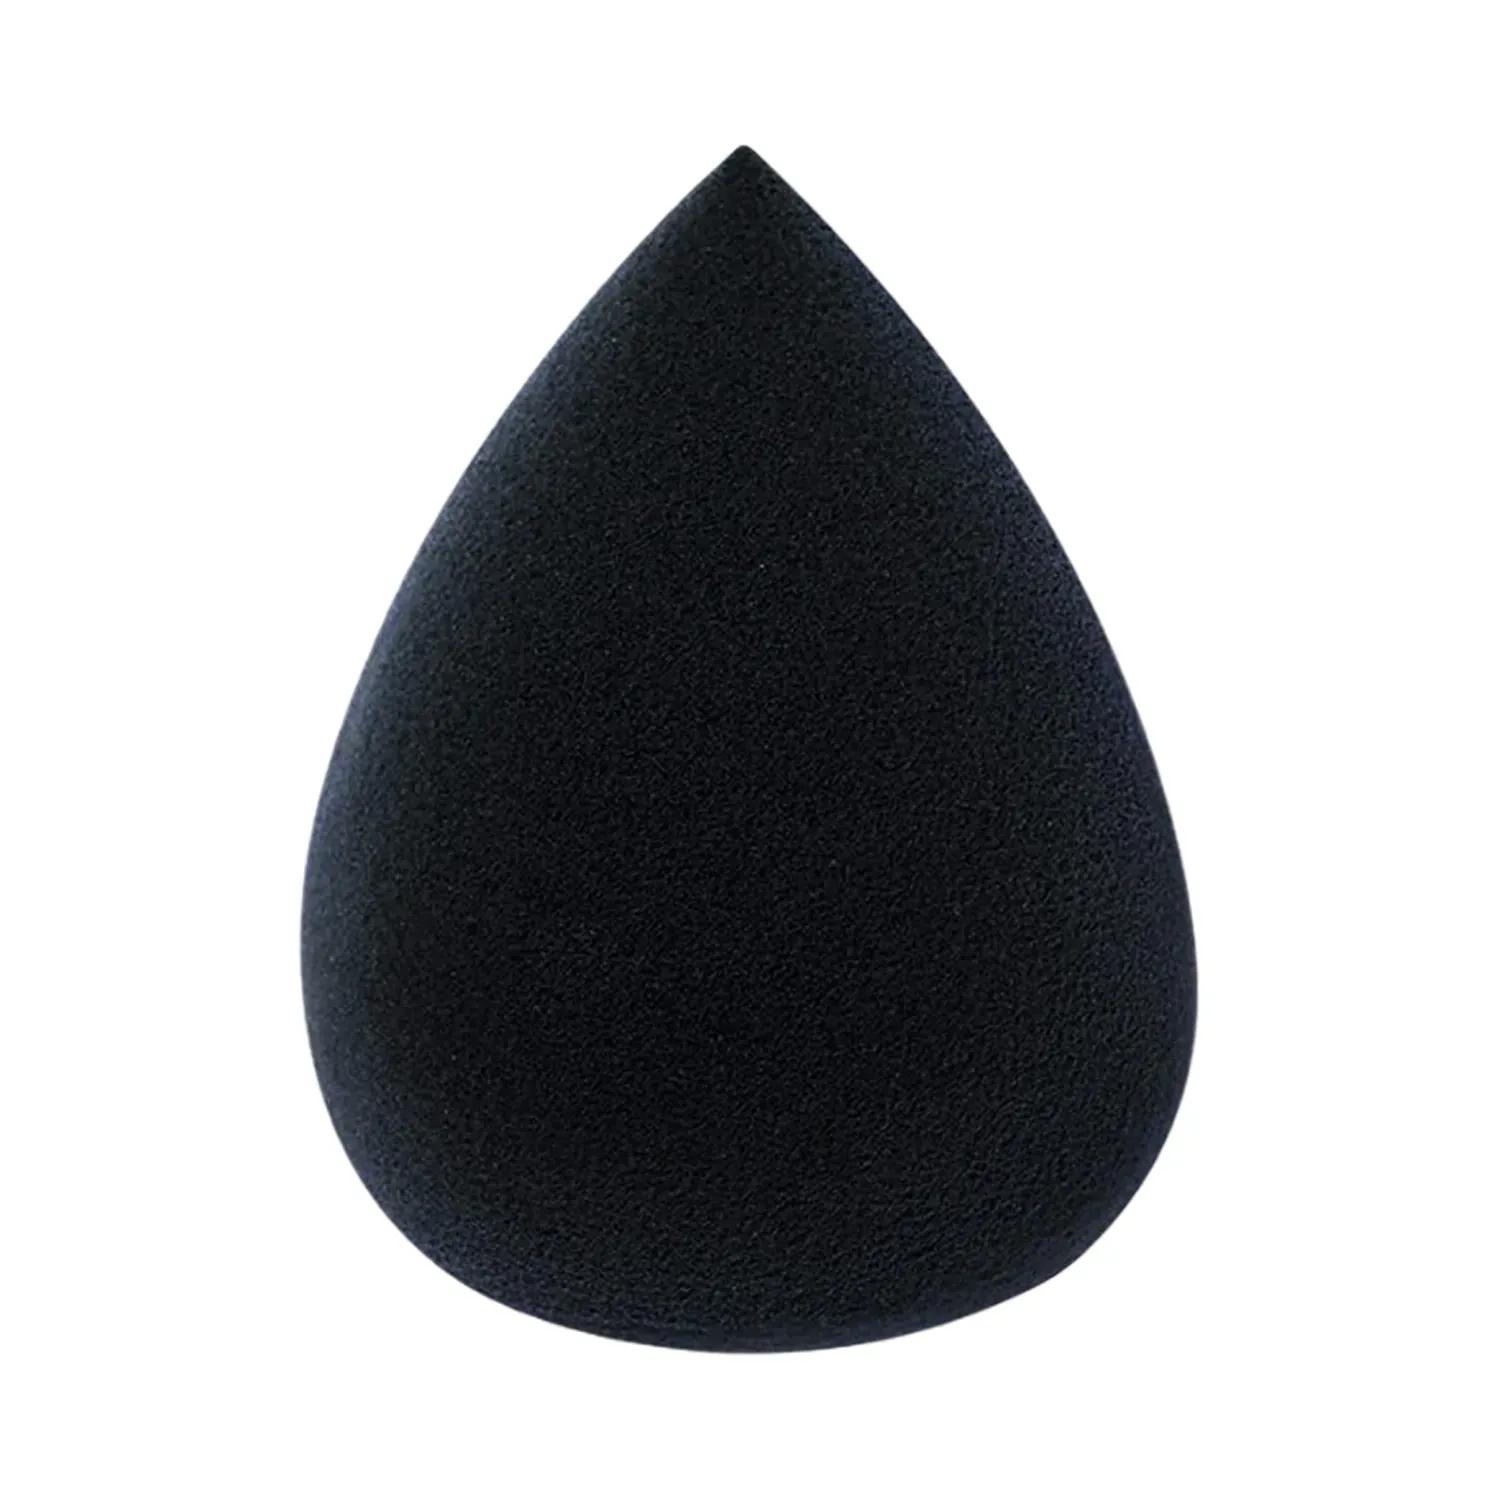 bronson professional tear drop beauty blender sponge (black)